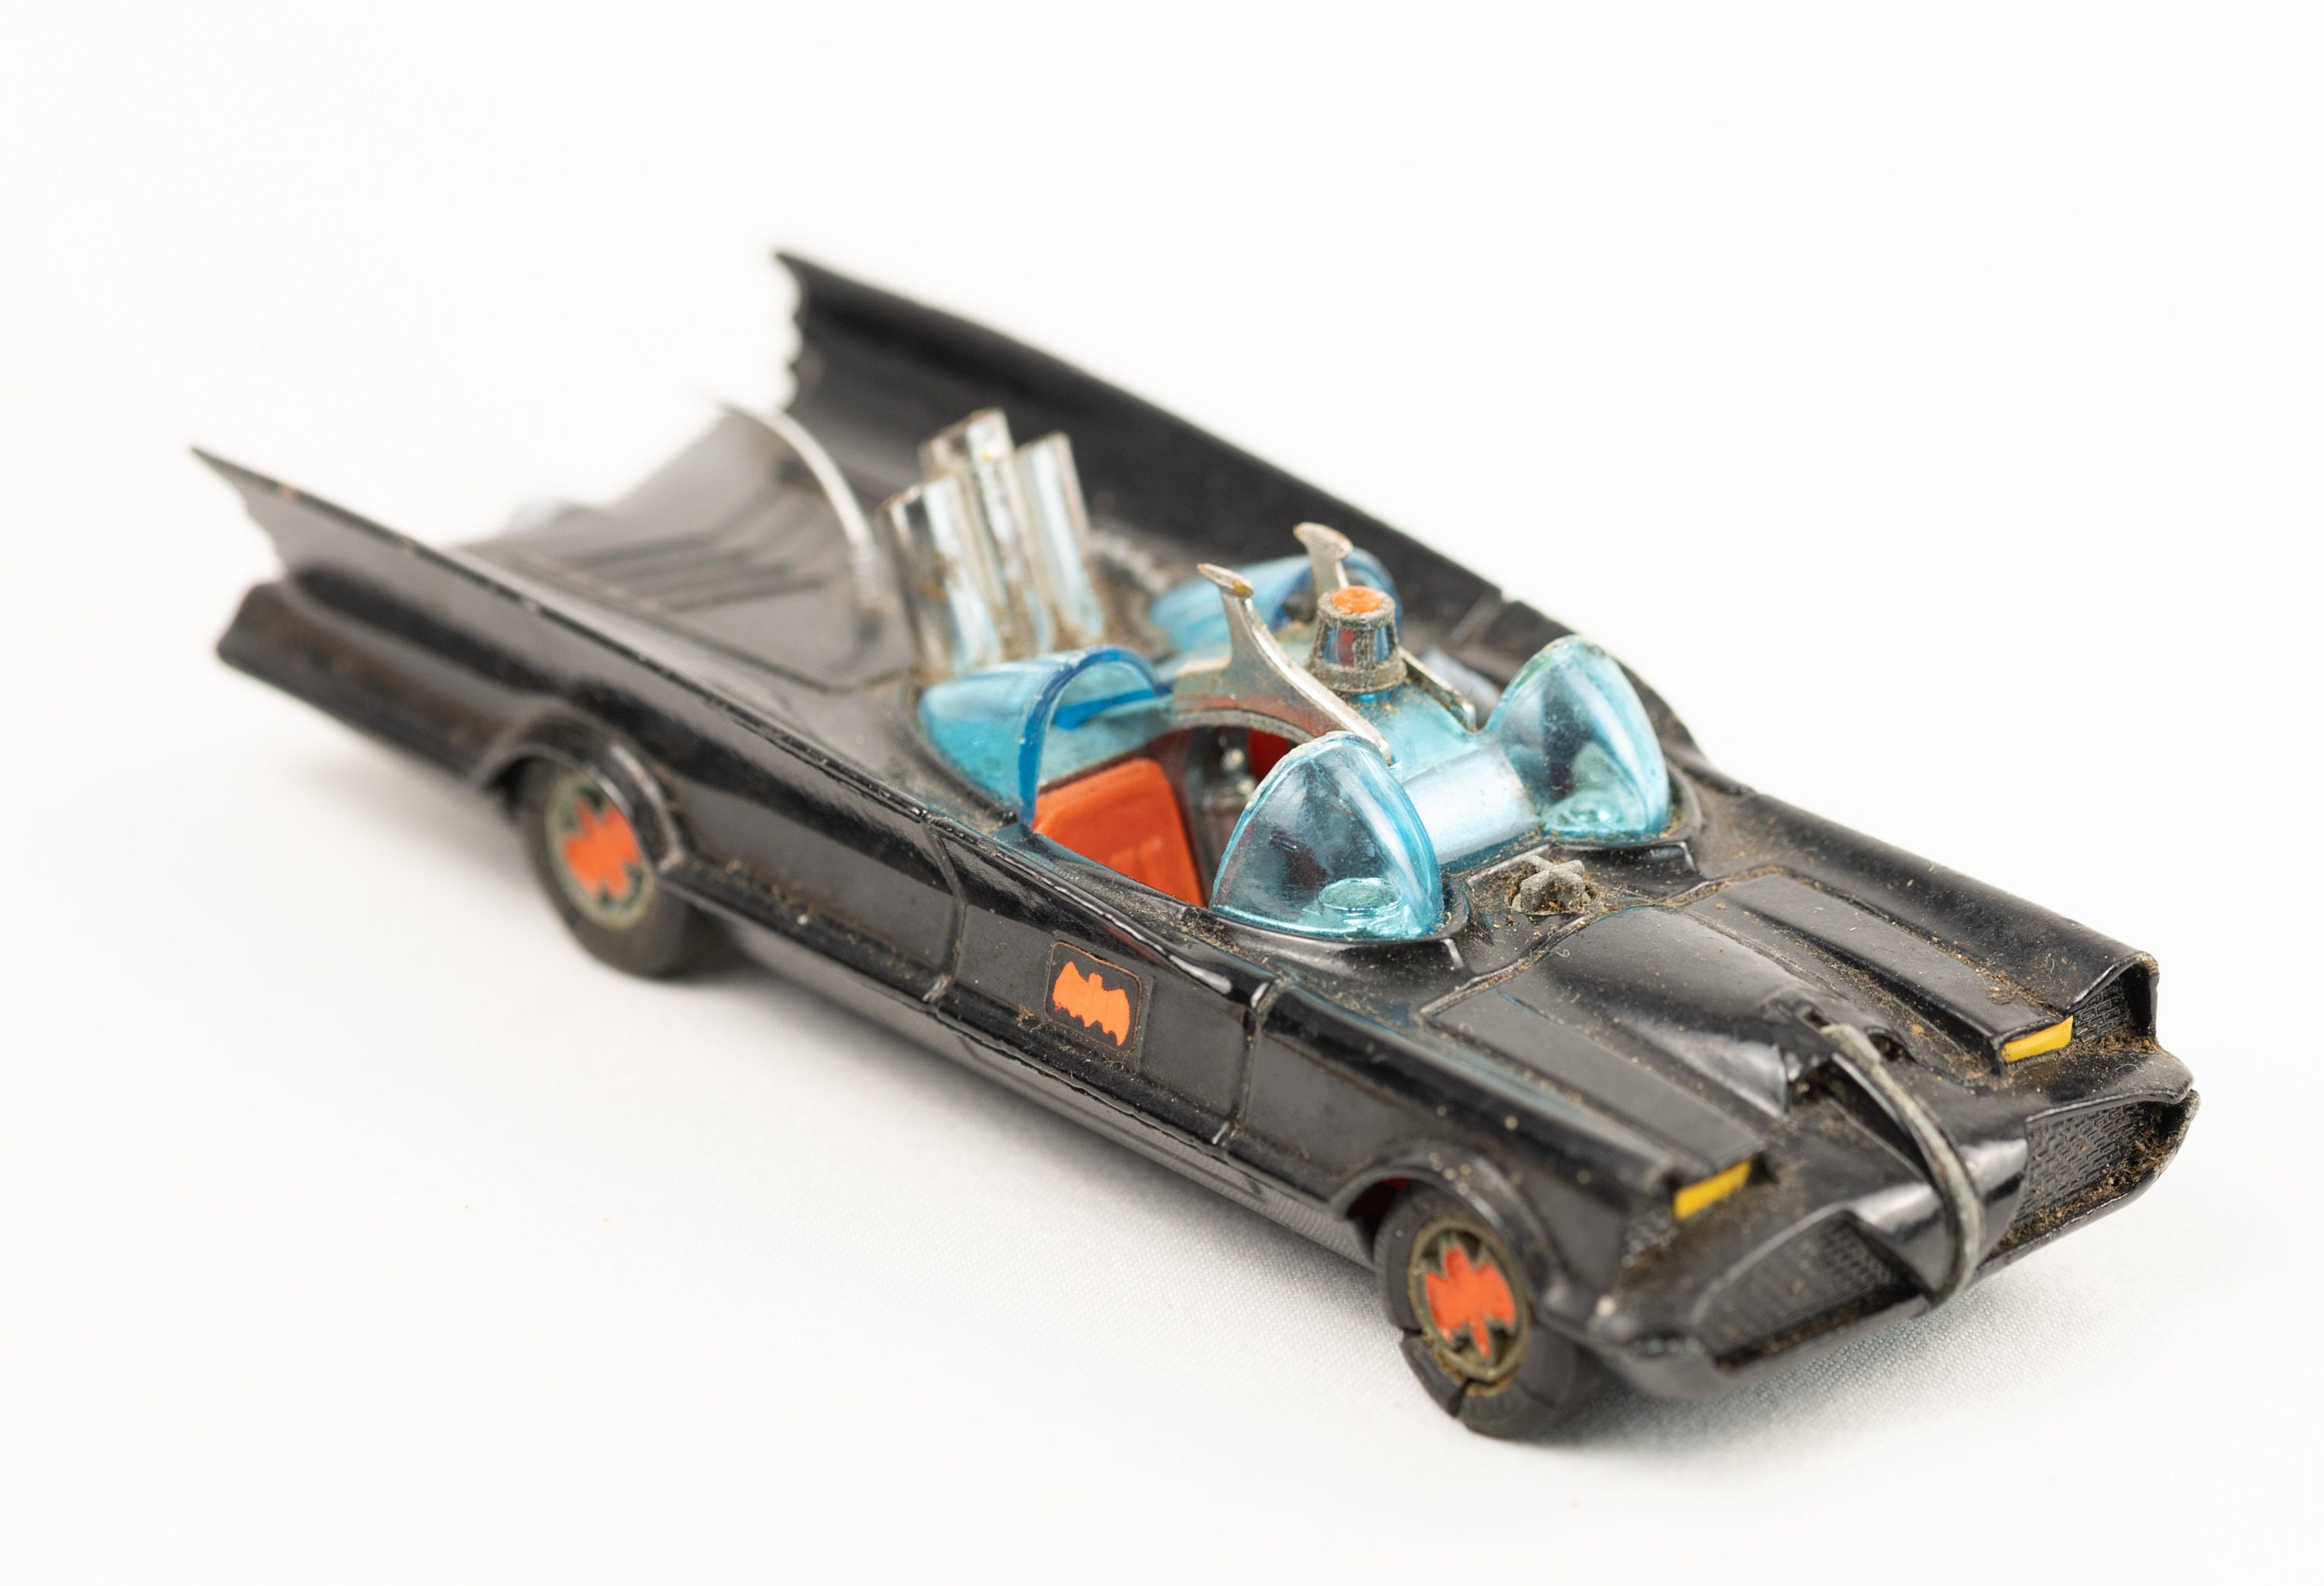 Vintage Corgi 1966 Batman Batmobile Toy Car Restoration 